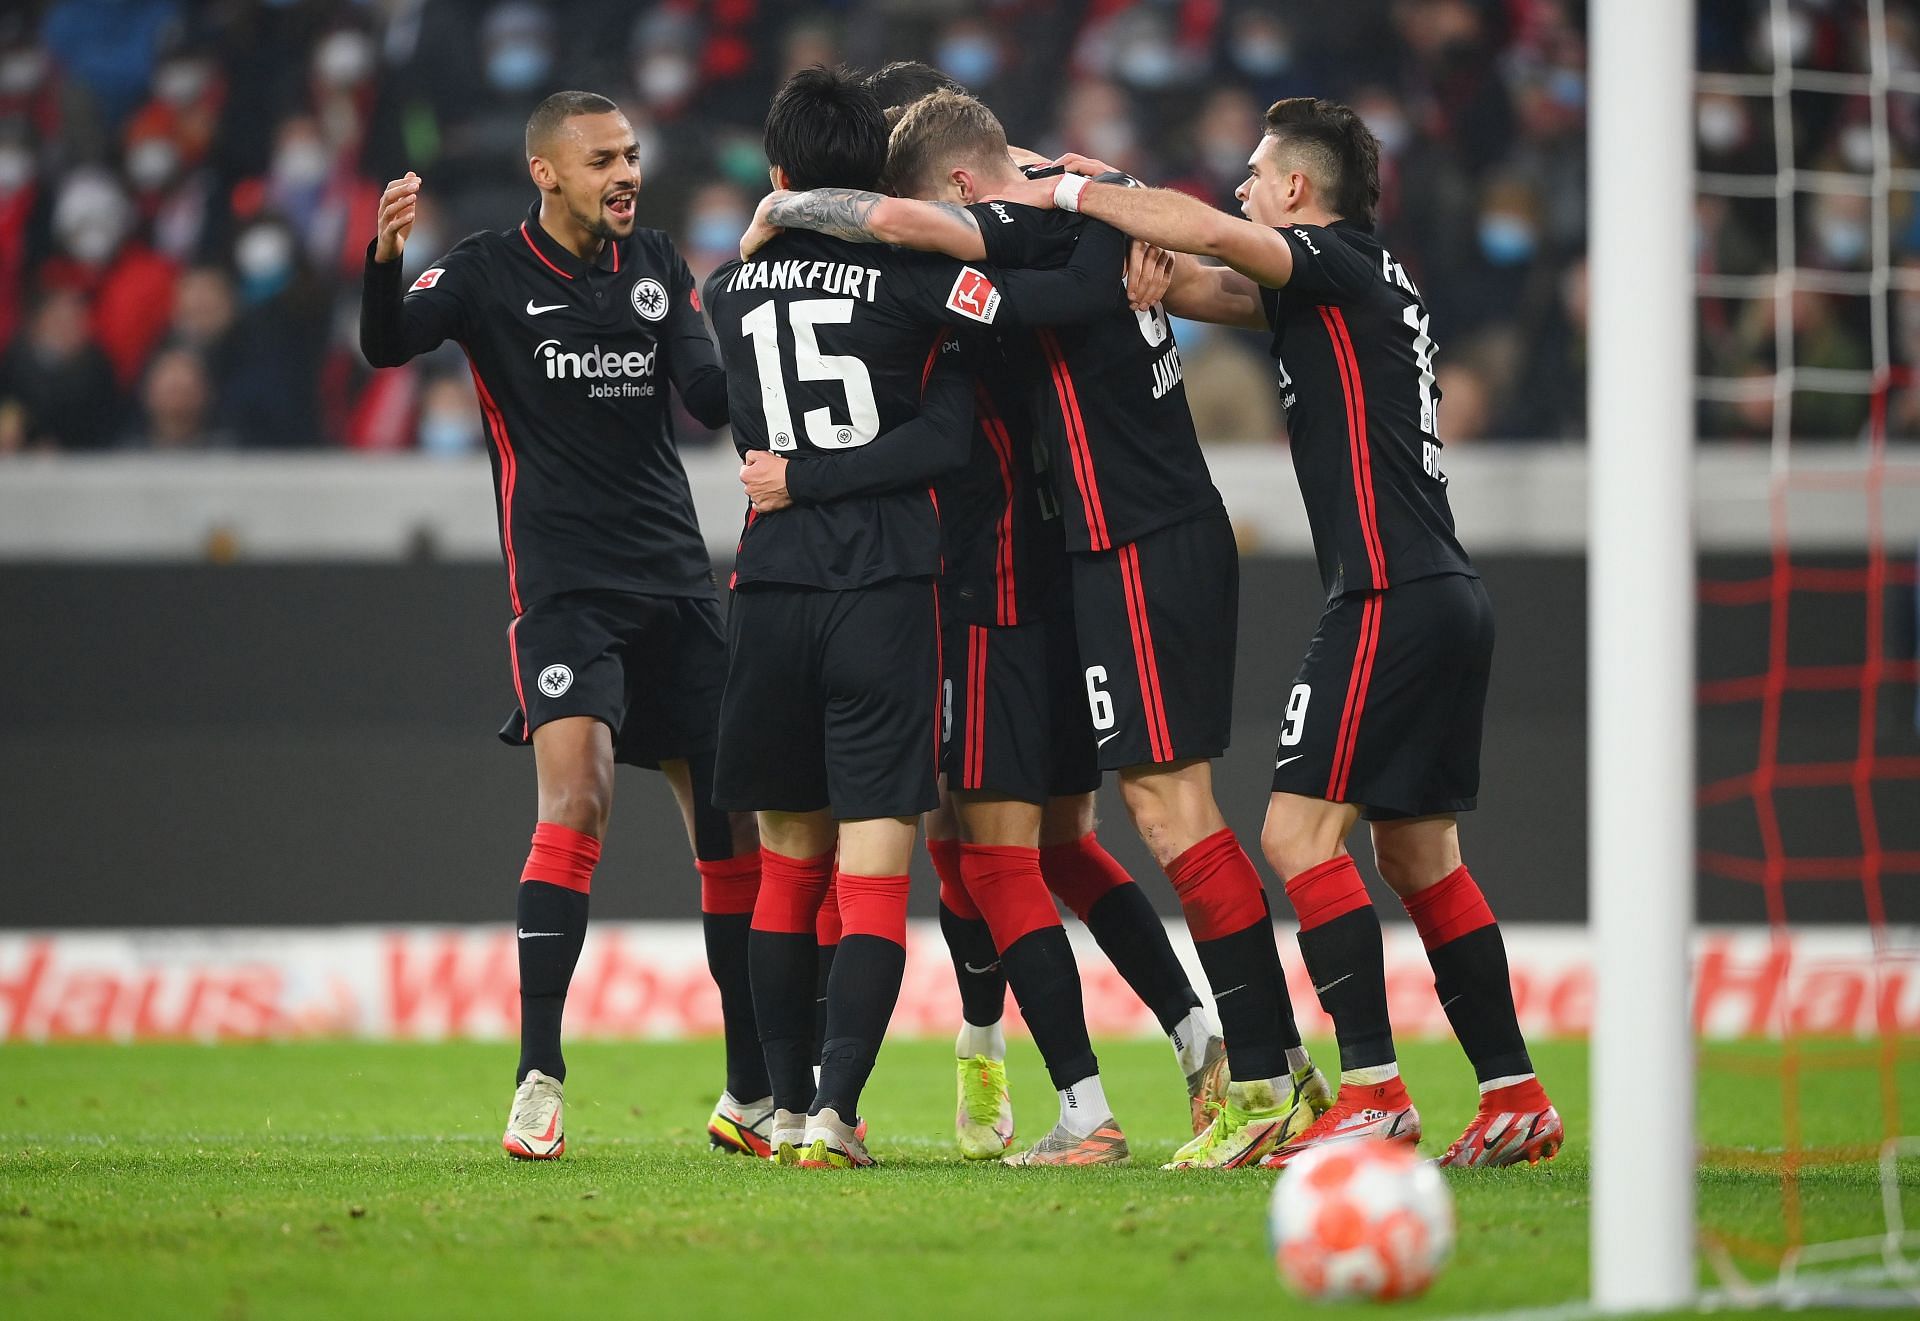 Eintracht Frankfurt will host Royal Antwerp in the Europa League